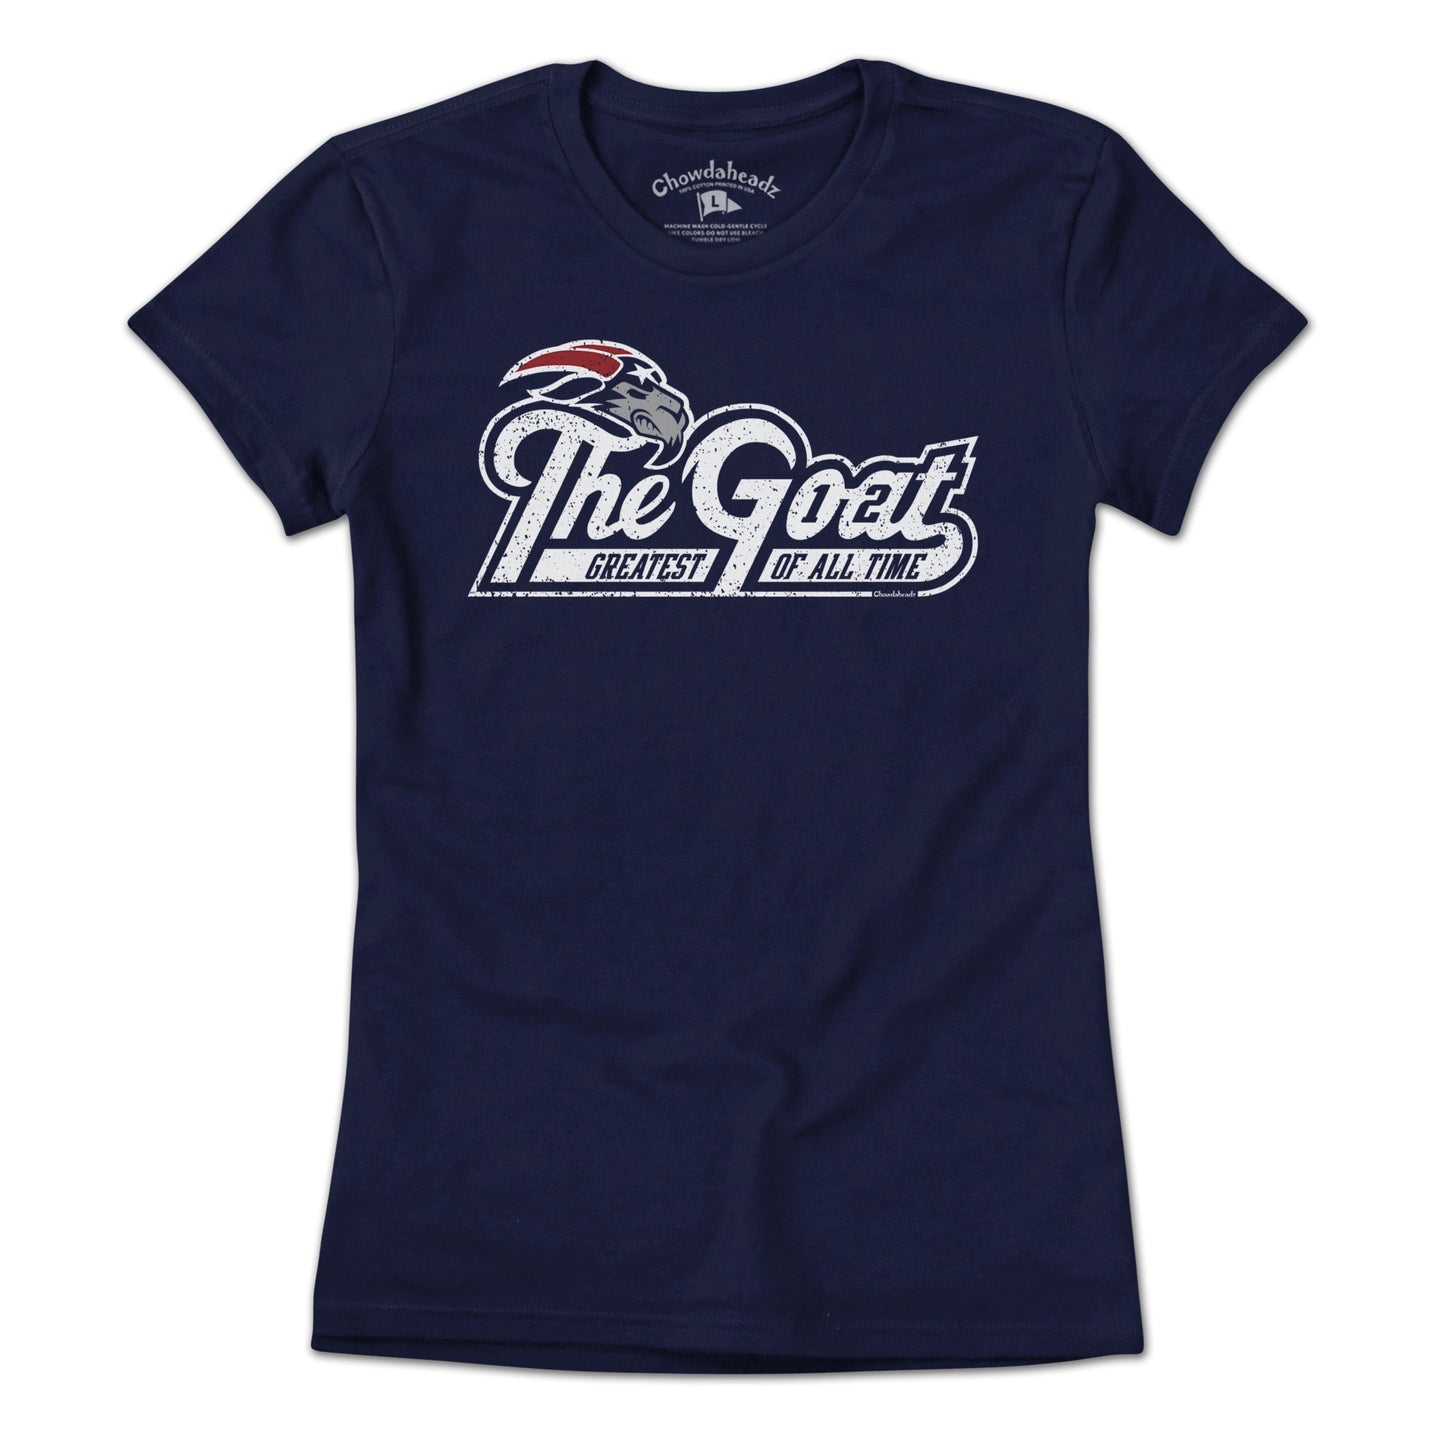 The Goat T-Shirt - Chowdaheadz